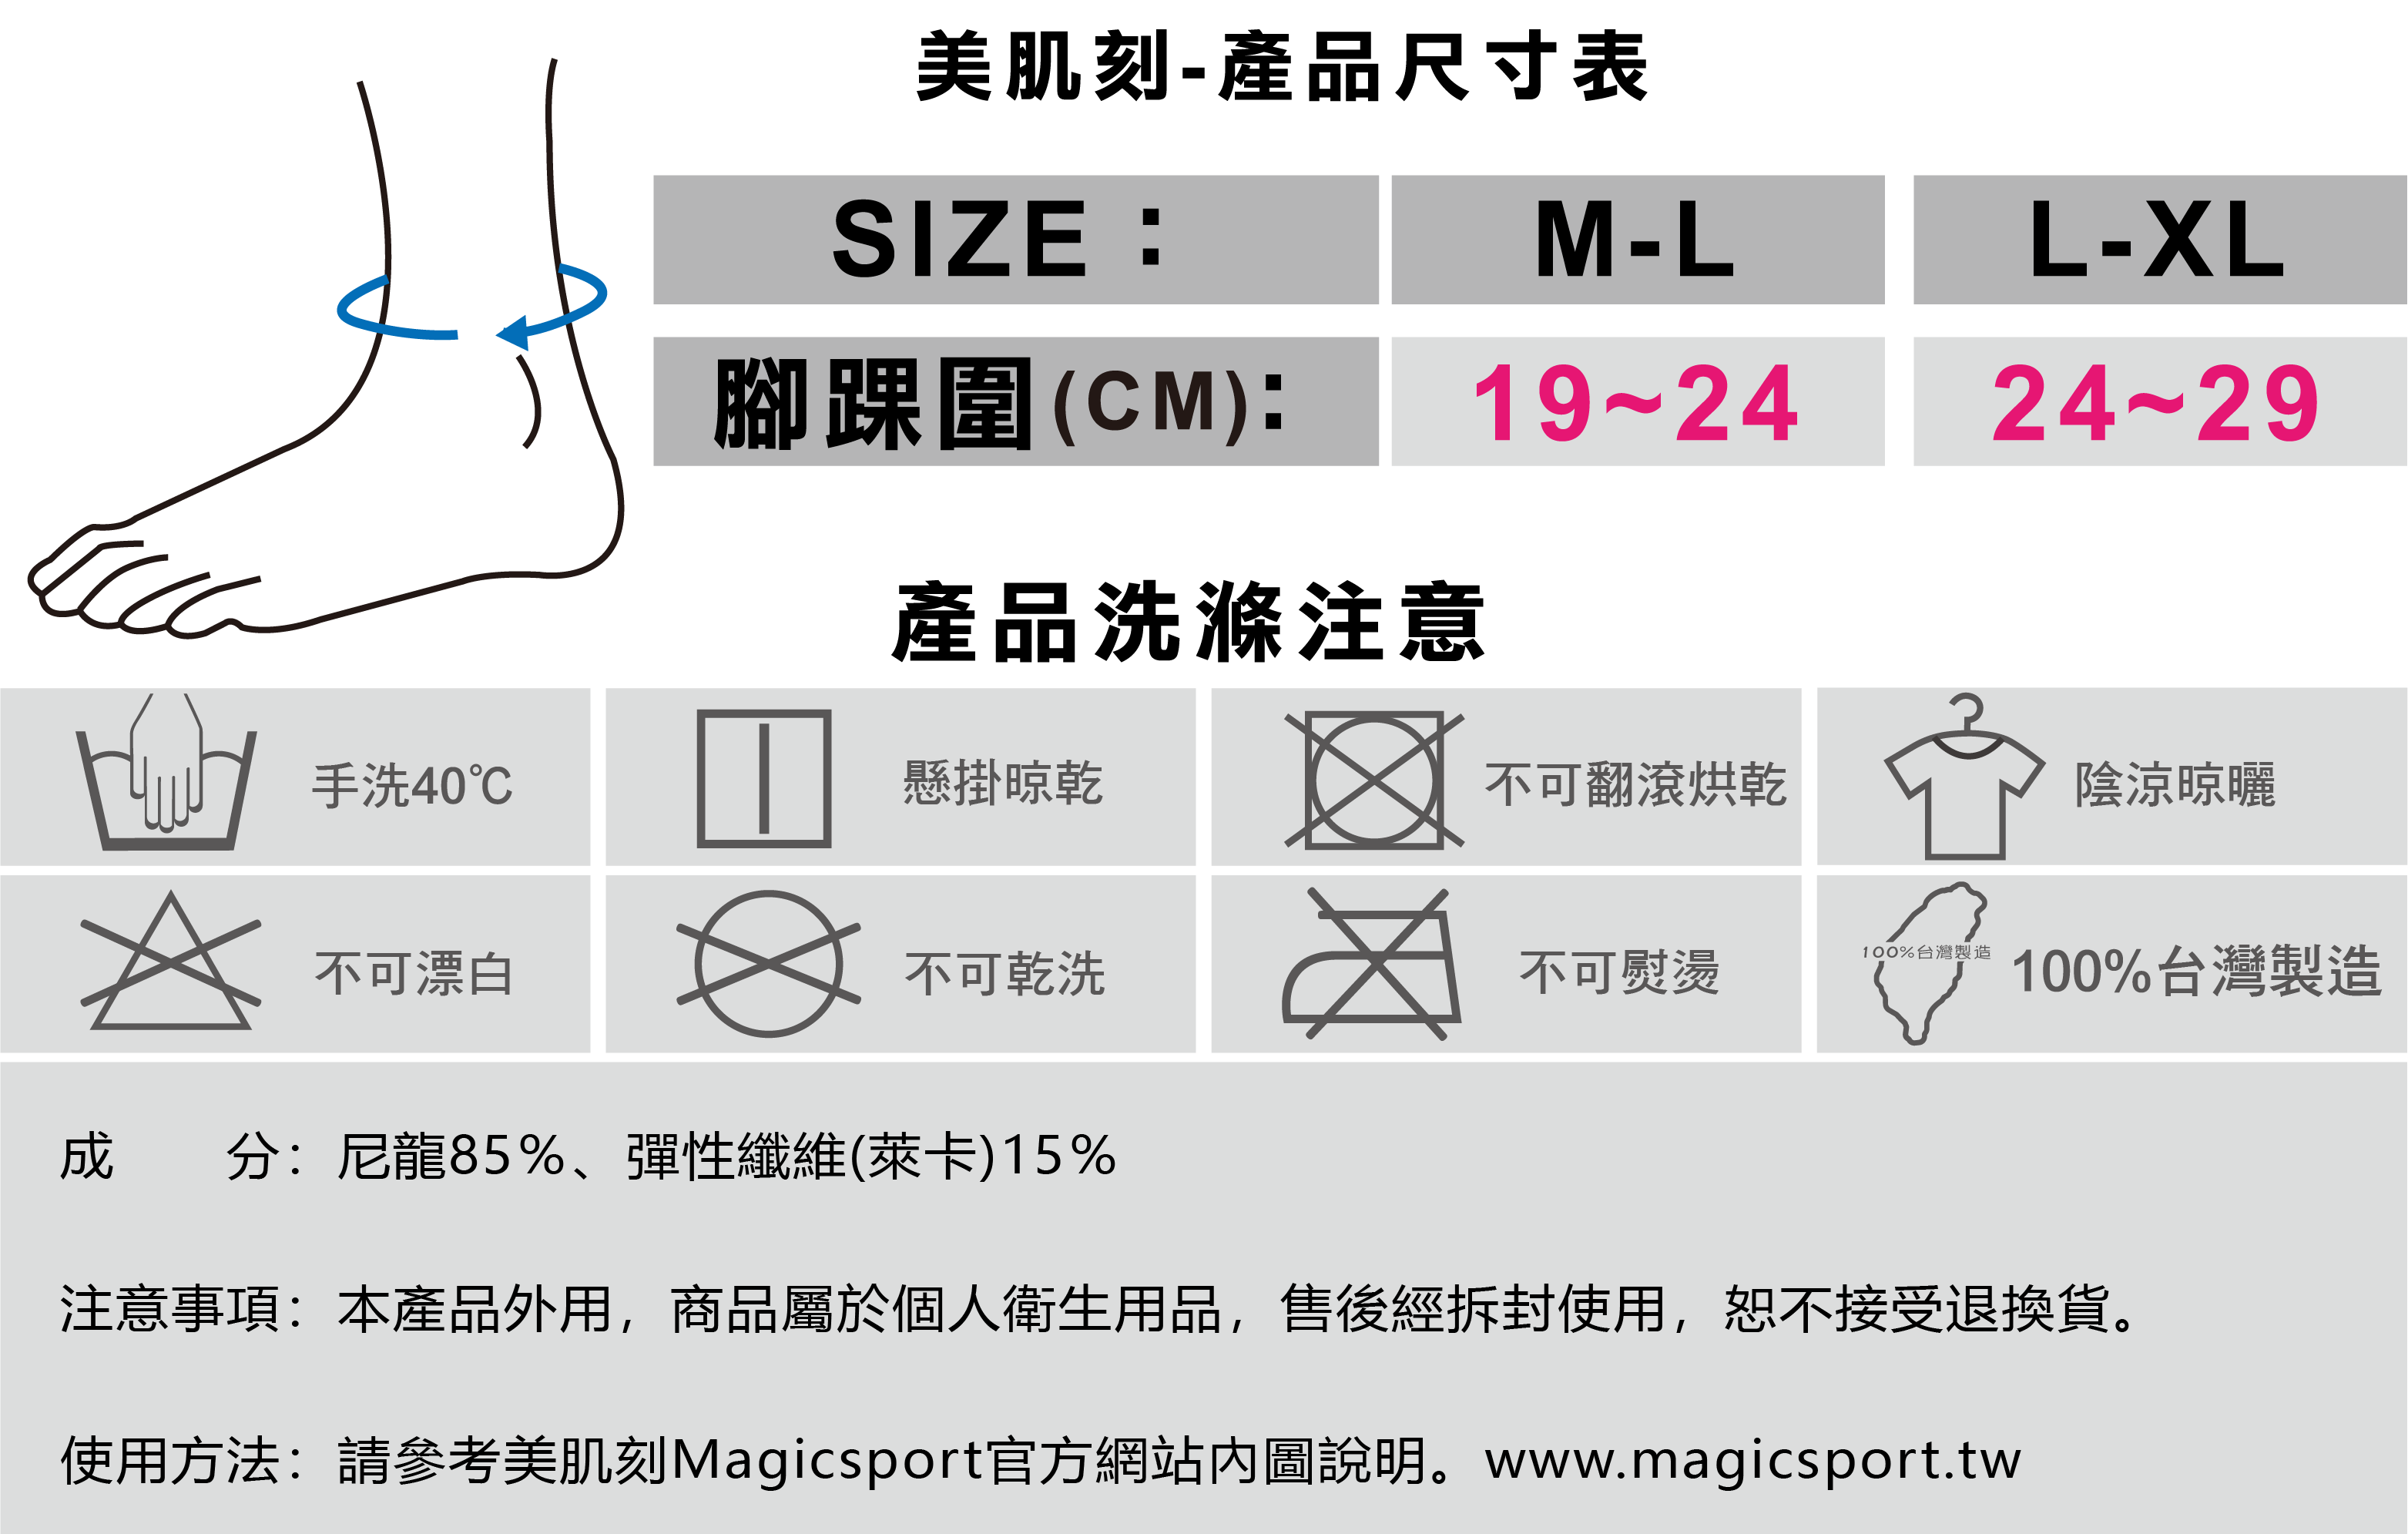 Magicsport官網獨賣_足弓_減壓專區_JG-055足踝固定套_主圖04.jpg